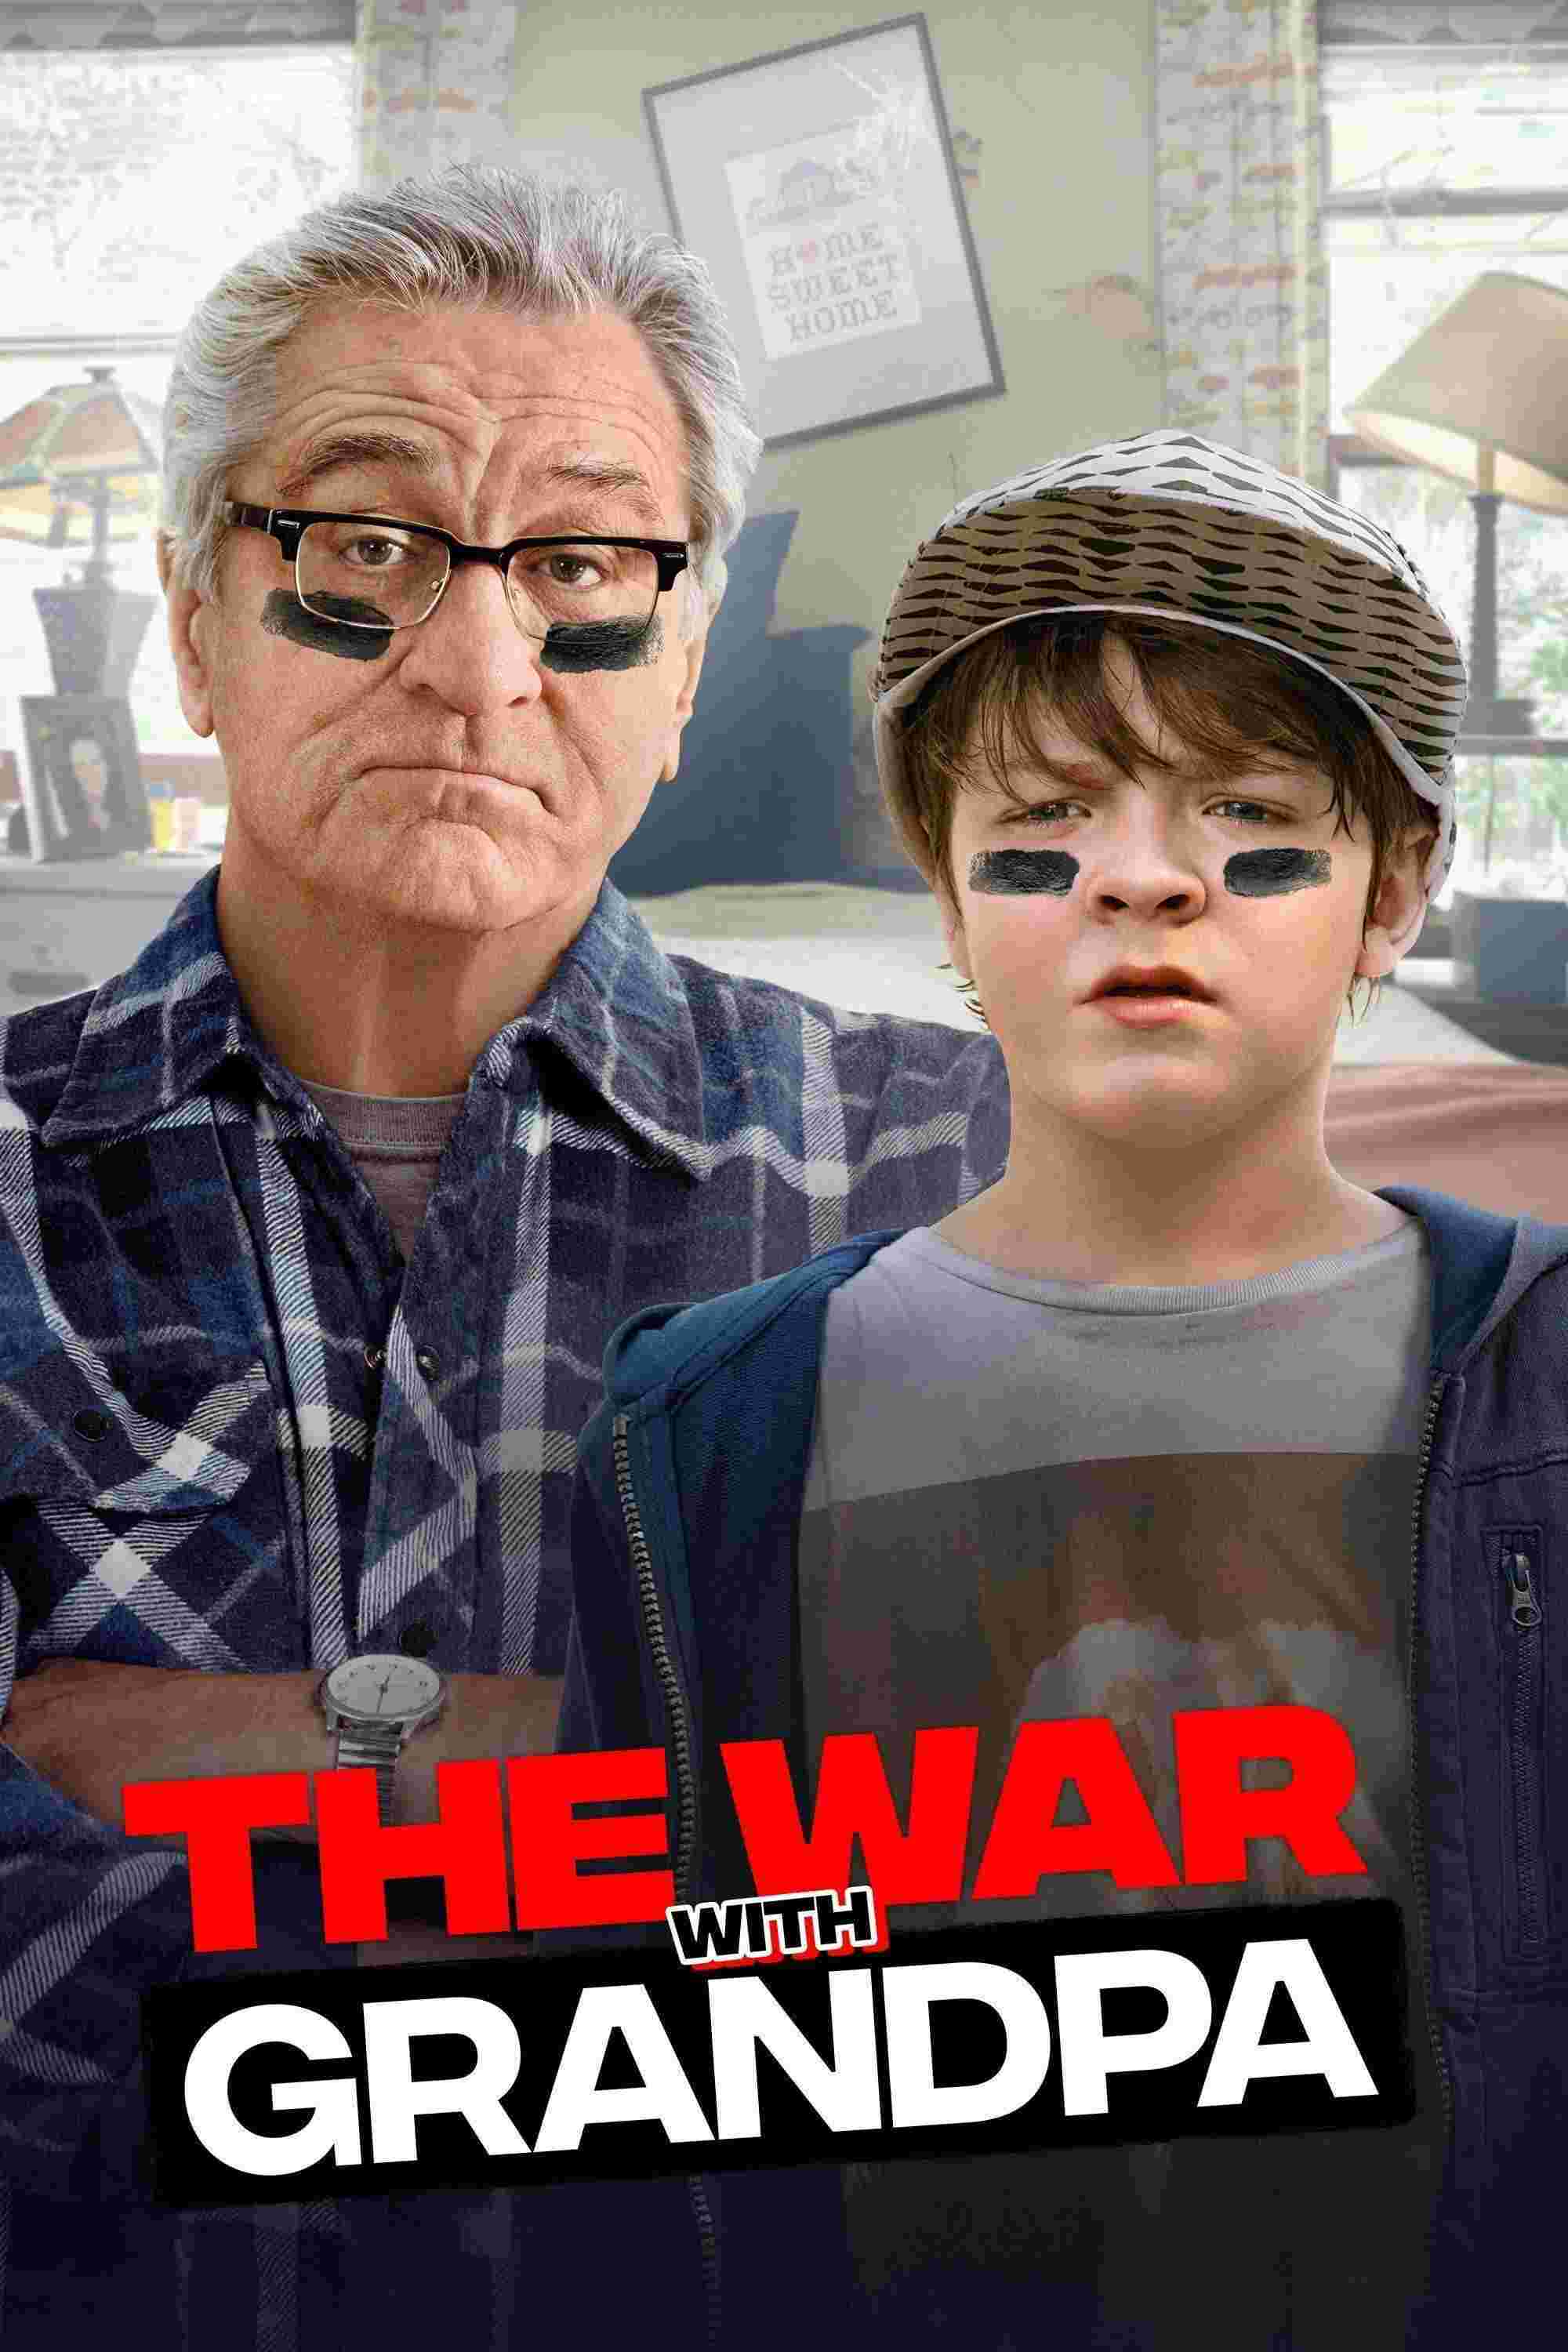 The War with Grandpa (2020) Robert De Niro